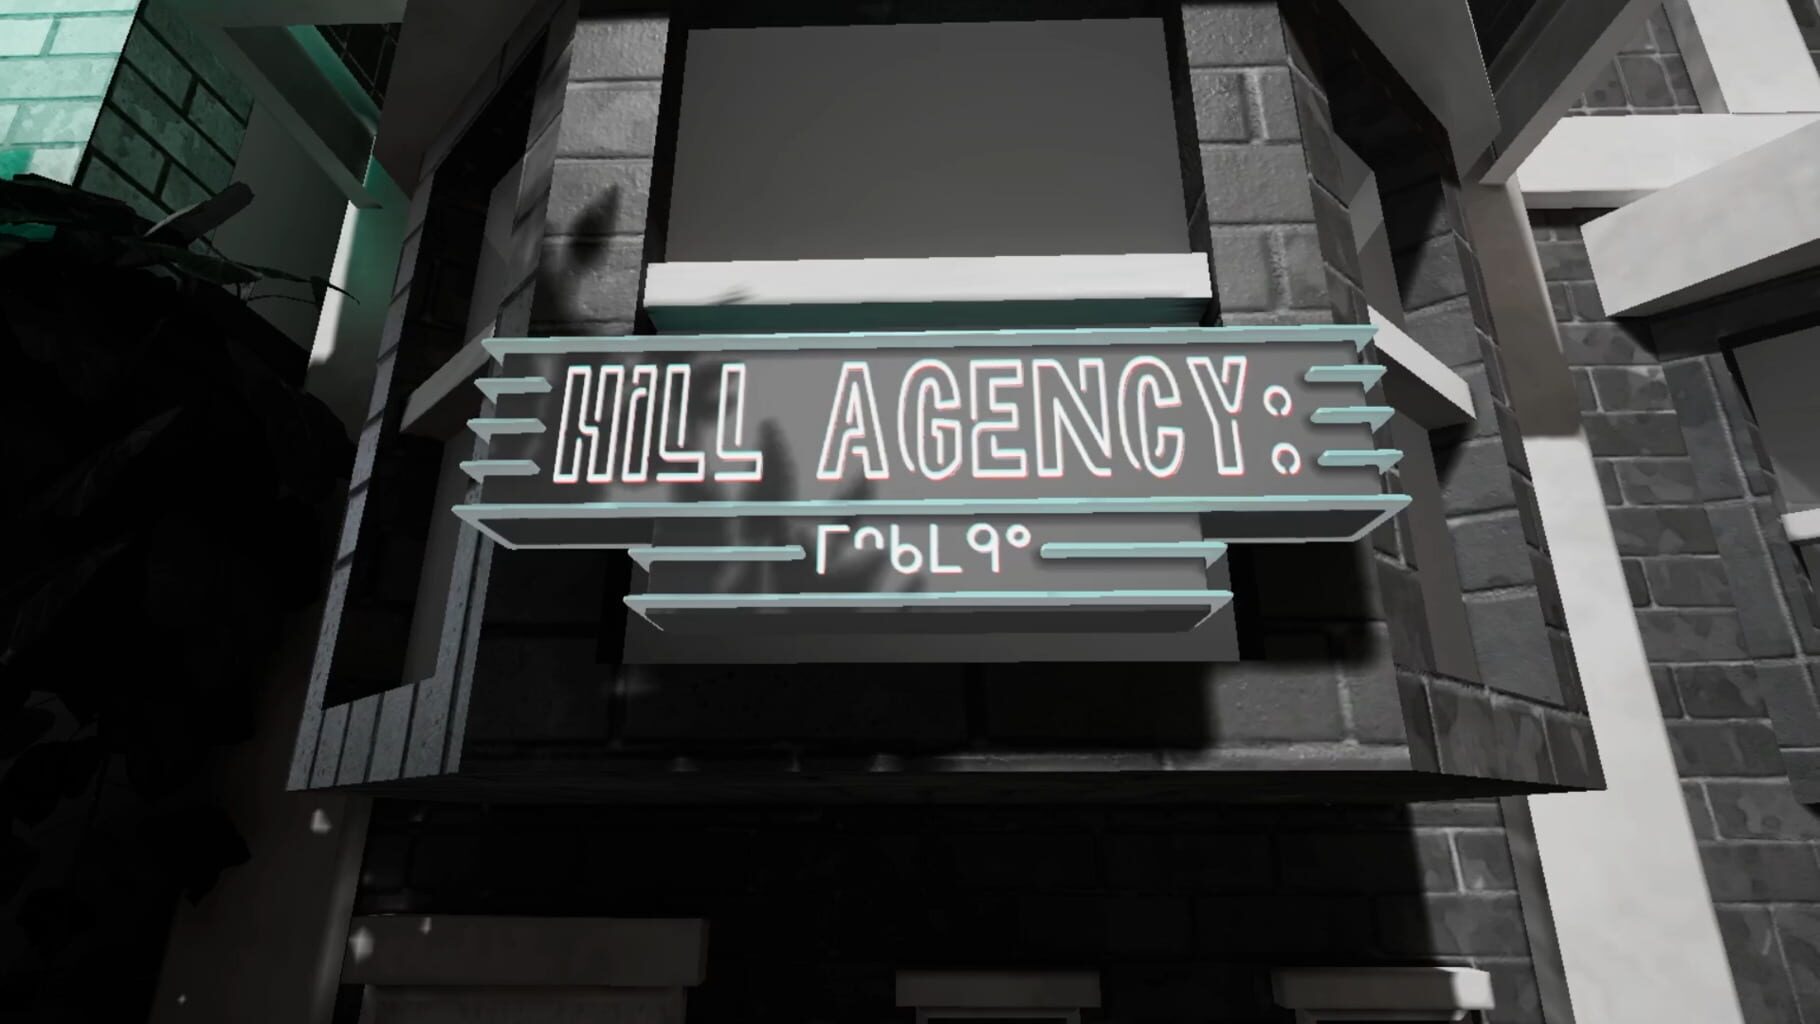 Hill Agency: Purity / Decay screenshot